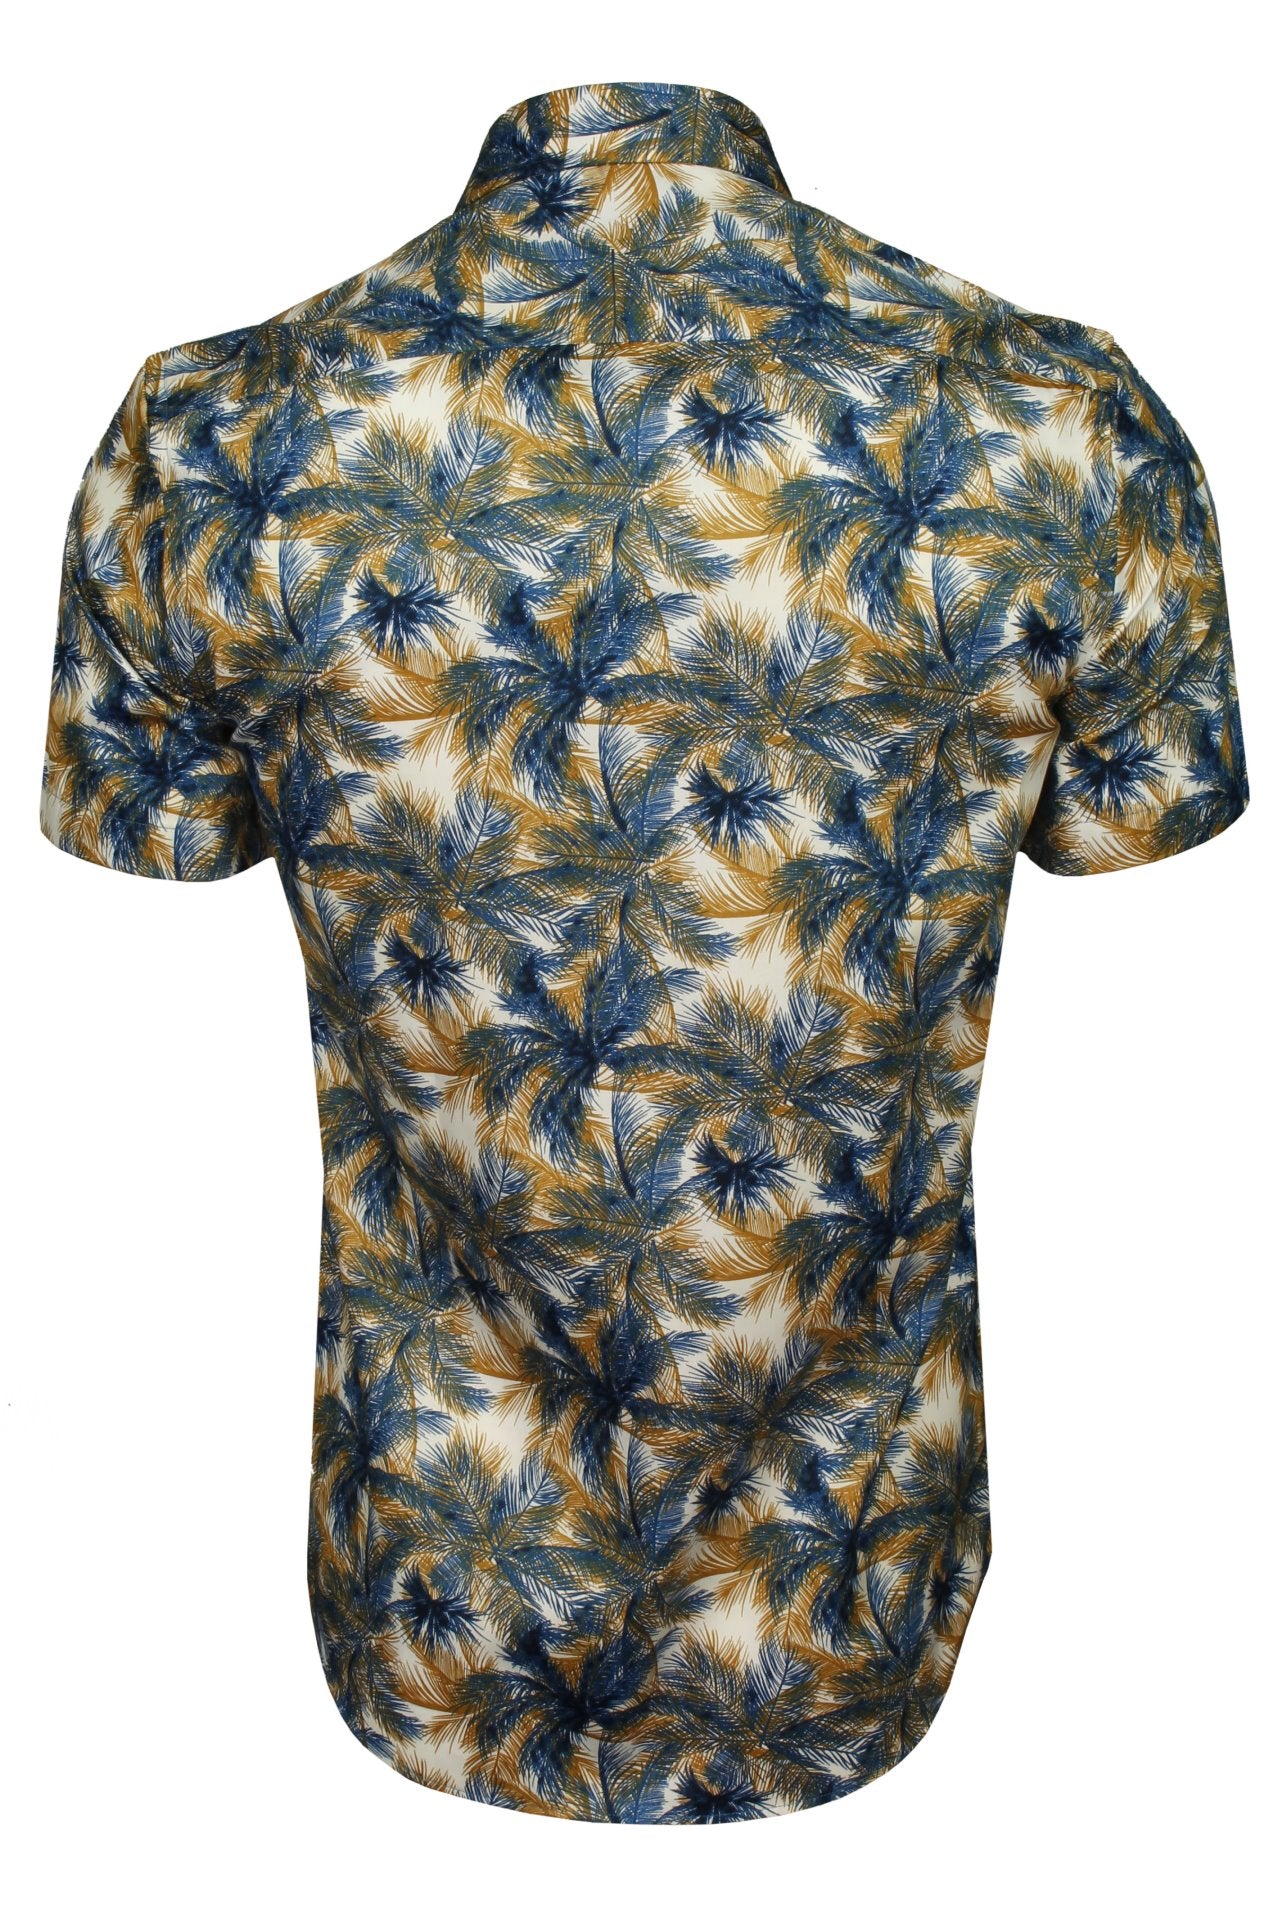 Xact Mens 100% Cotton Short Sleeved Hawaiian/ Floral Shirt-3